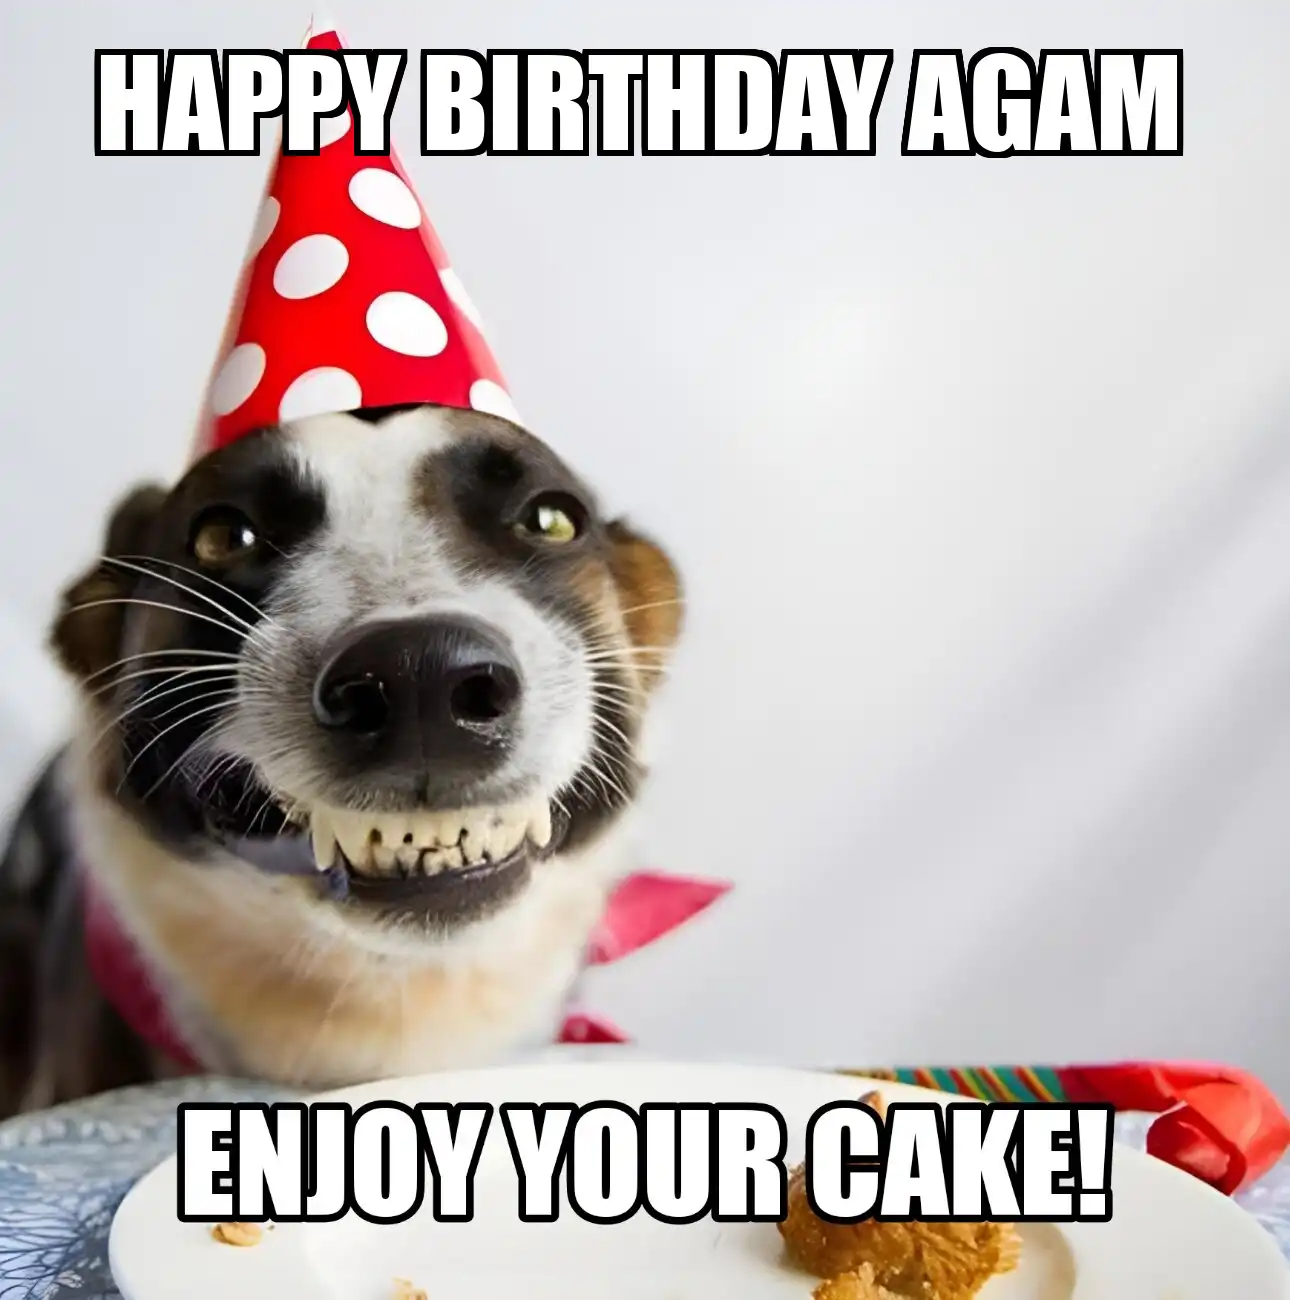 Happy Birthday Agam Enjoy Your Cake Dog Meme